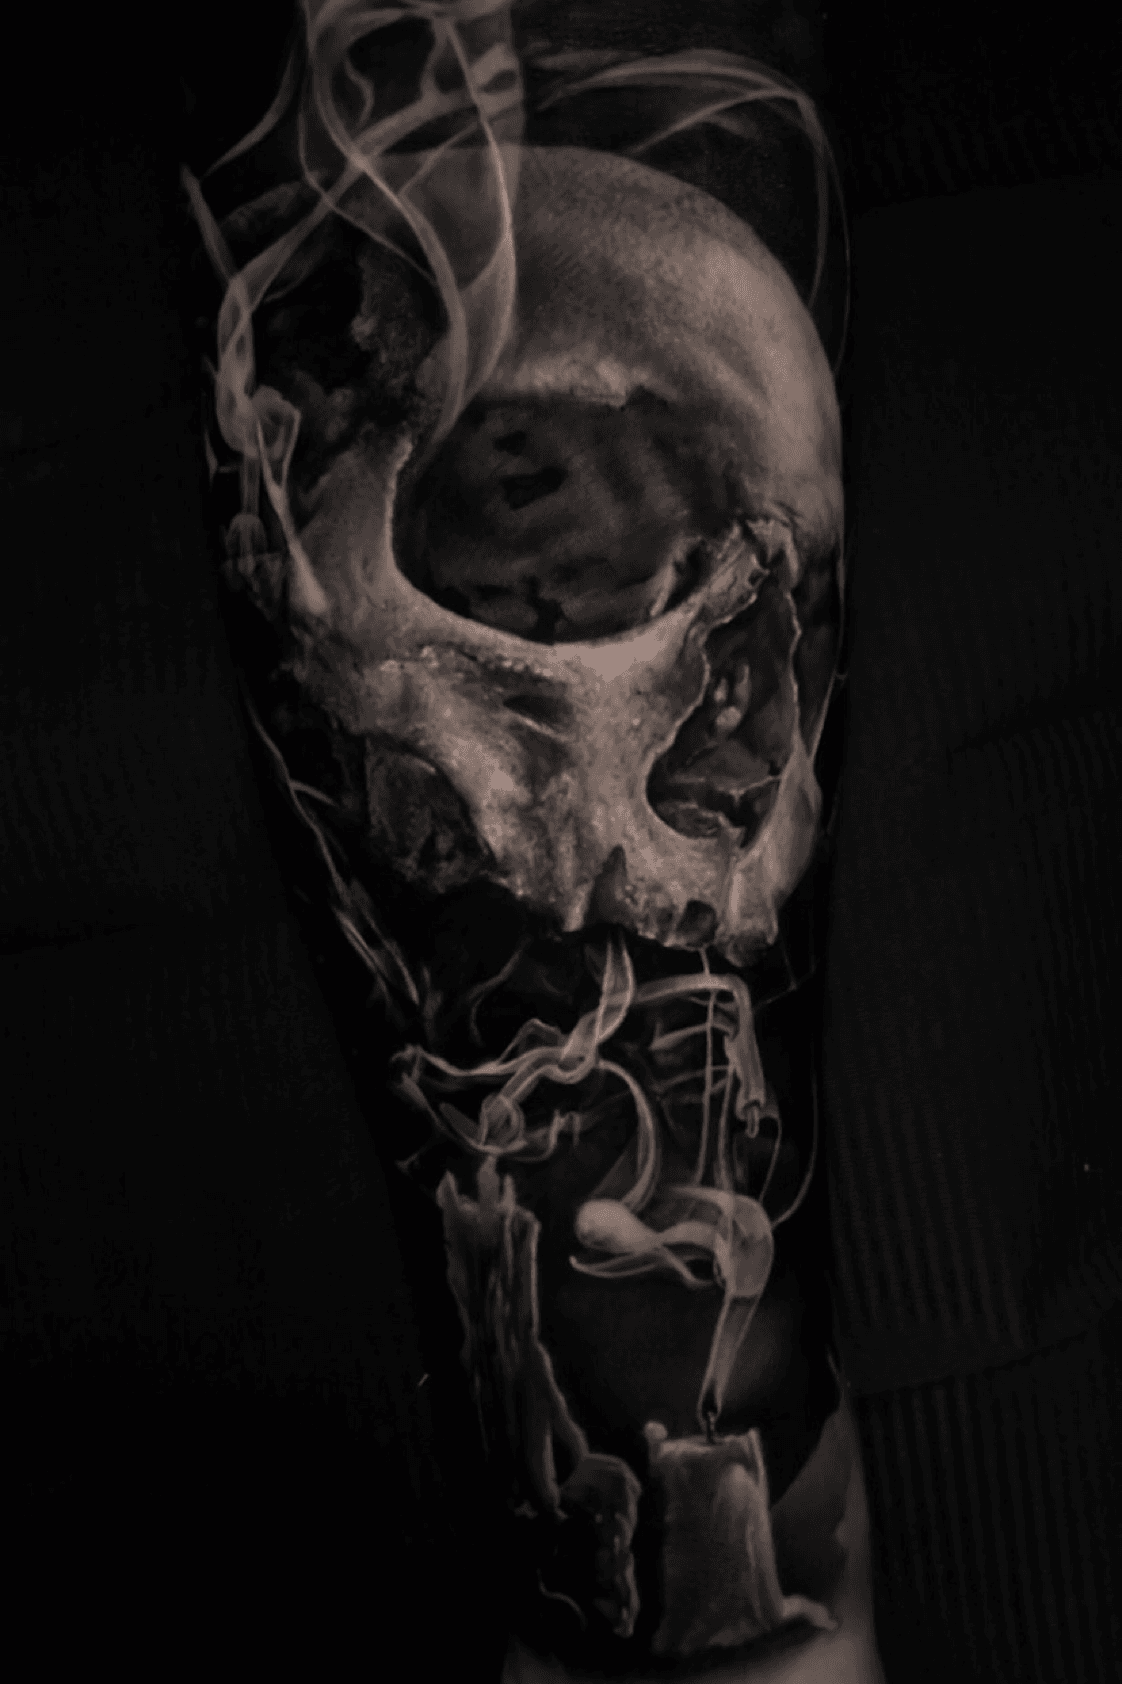 40 Background Of A Smoke Skull Tattoo Designs Illustrations RoyaltyFree  Vector Graphics  Clip Art  iStock